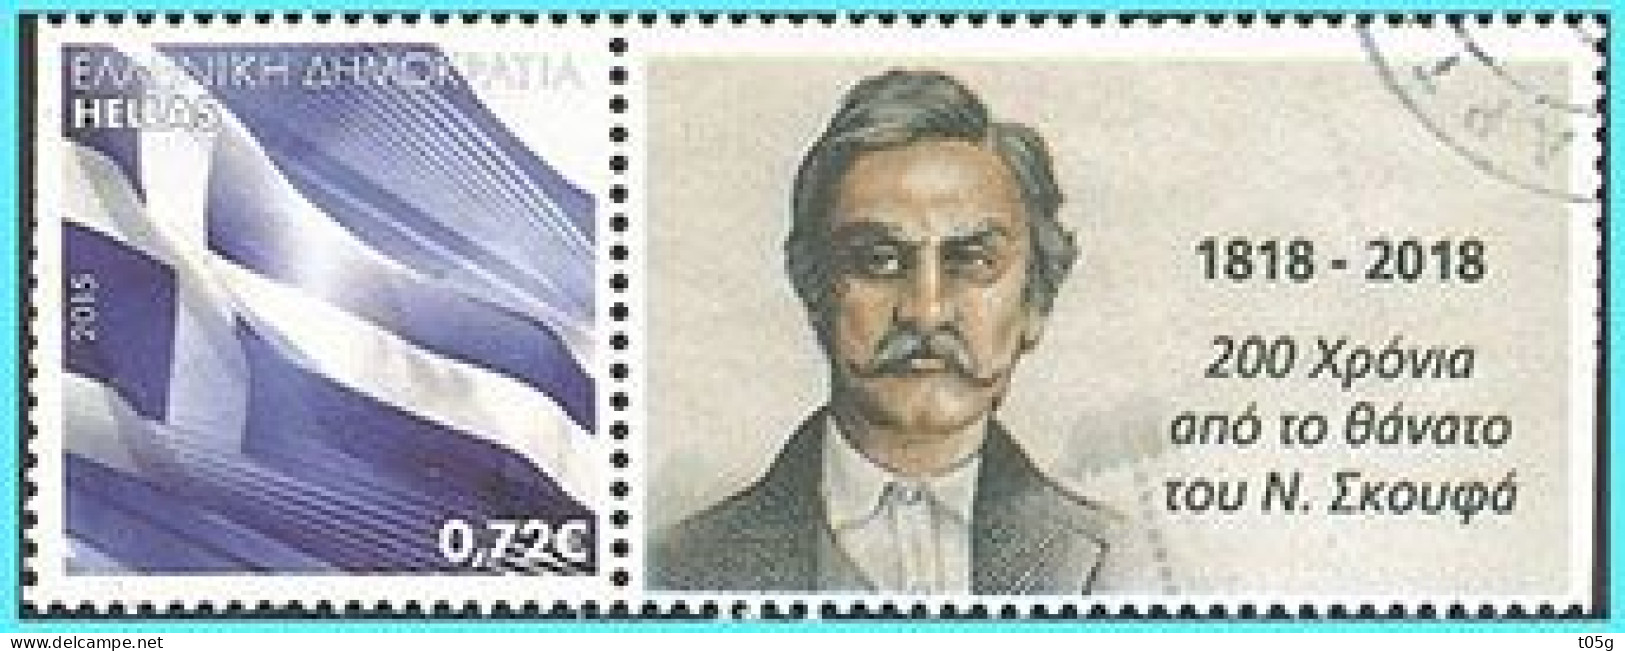 GREECE- GRECE- HELLAS- EPIRUS  2020: Personalised Stamps For τον  Ν. ΣΚΟΥΦΑ  ιδρυτή της ΦΙΛΙΚΗΣ ΕΤΑΙΡΕΙΑΣ  Used - Used Stamps